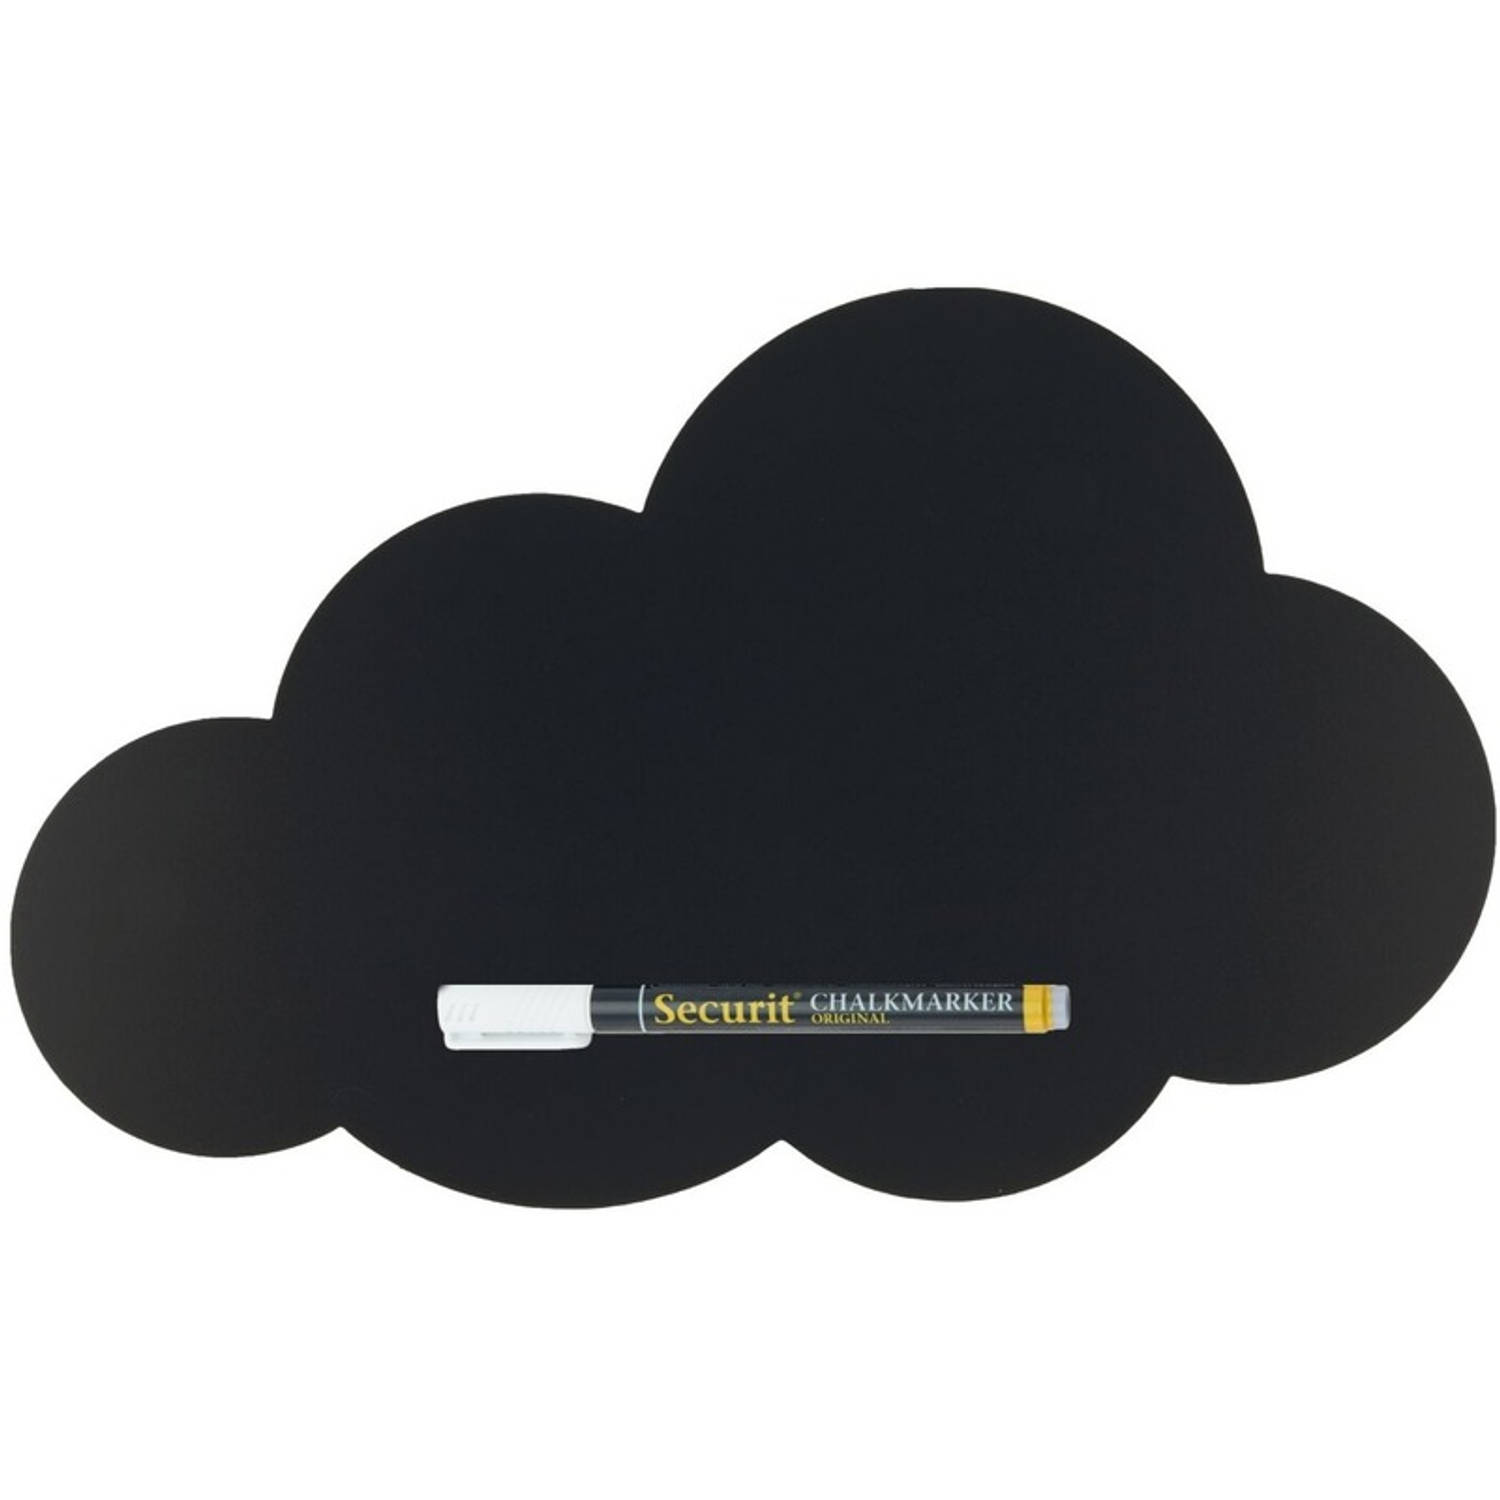 Zwart wolk krijtbord-schoolbord met 1 stift 49 x 30 cm Krijtborden